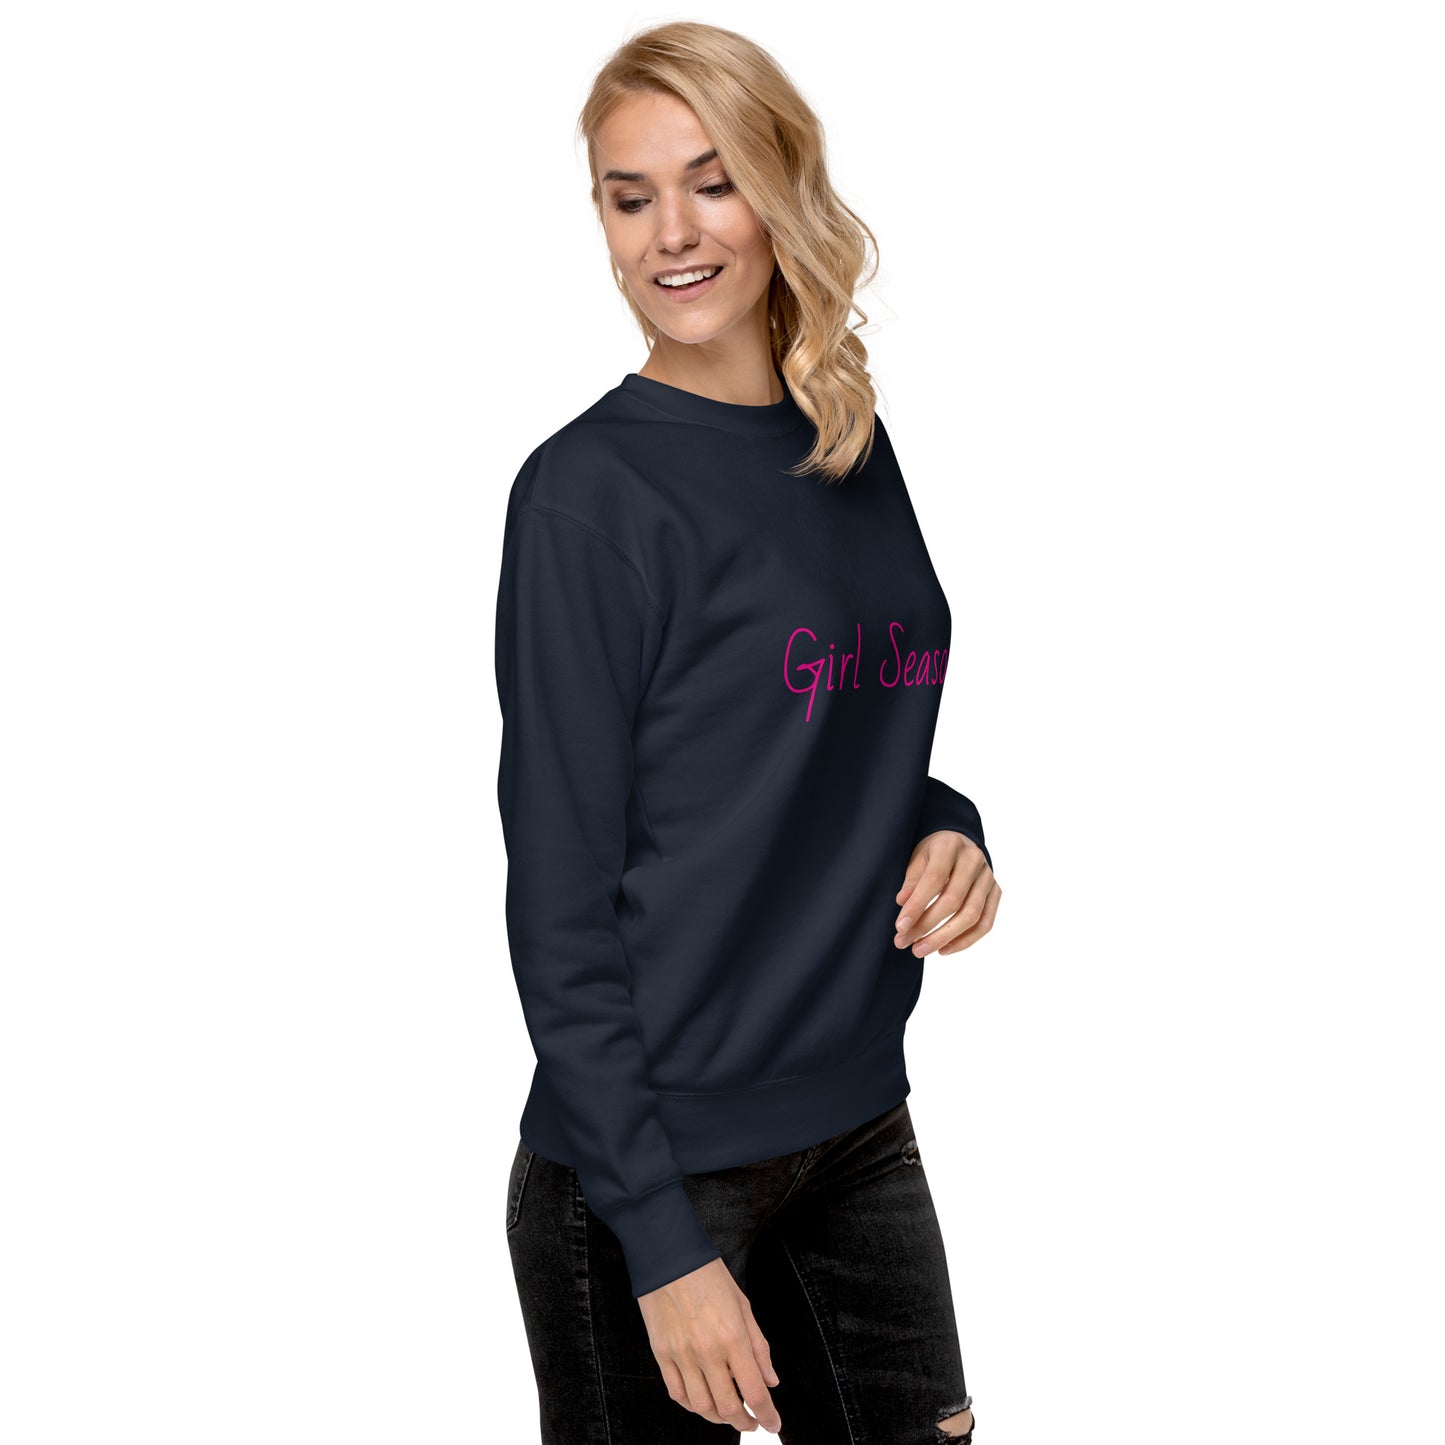 Girl Season Premium Sweatshirt